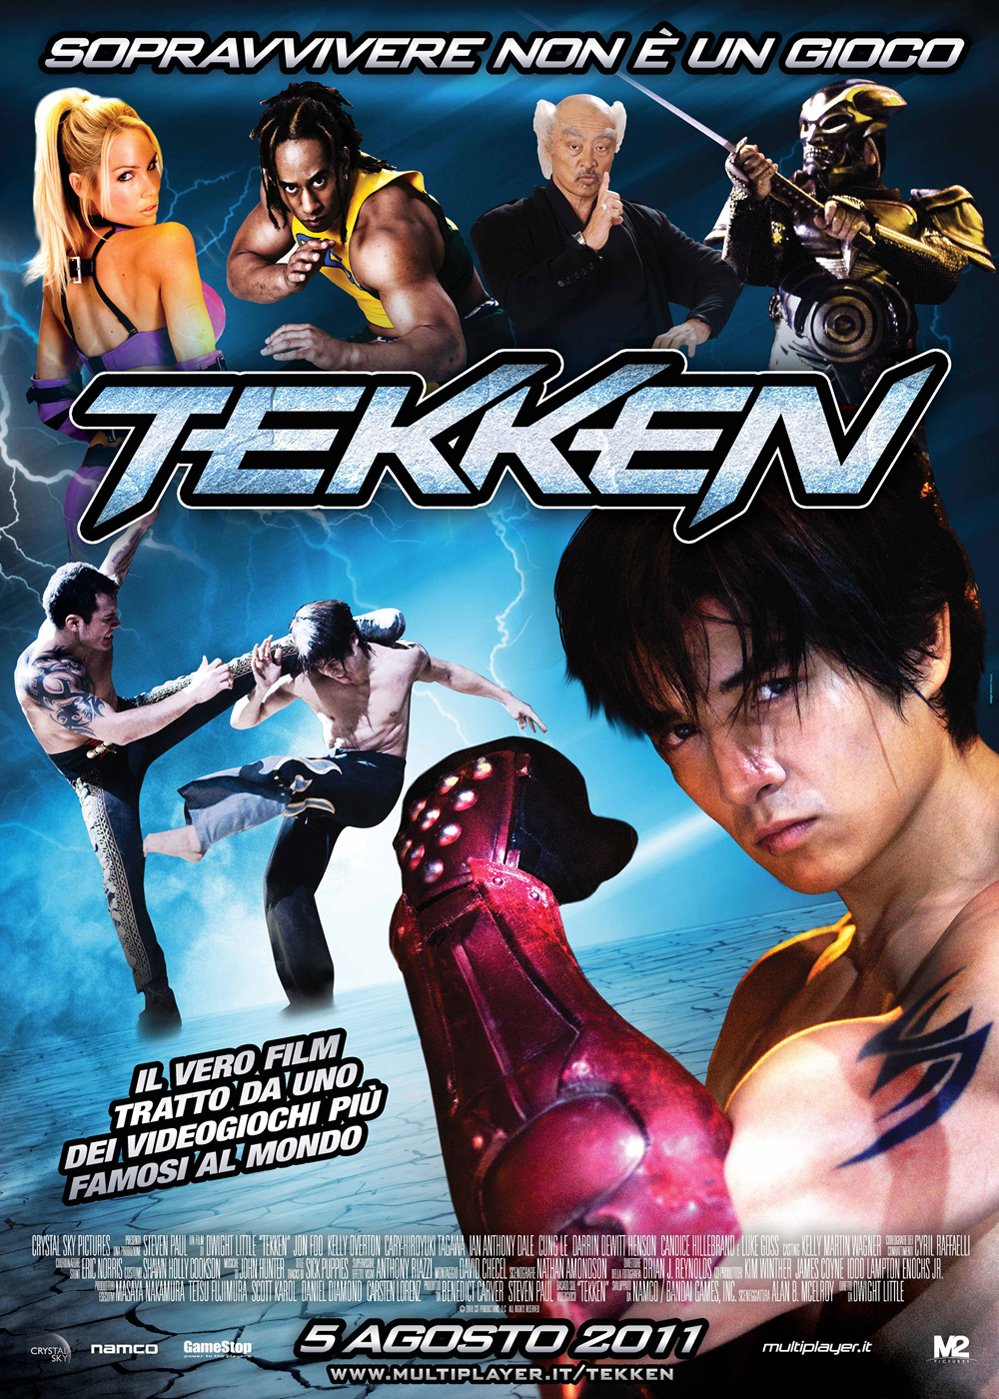 Extra Large Movie Poster Image for Tekken (#3 of 3)